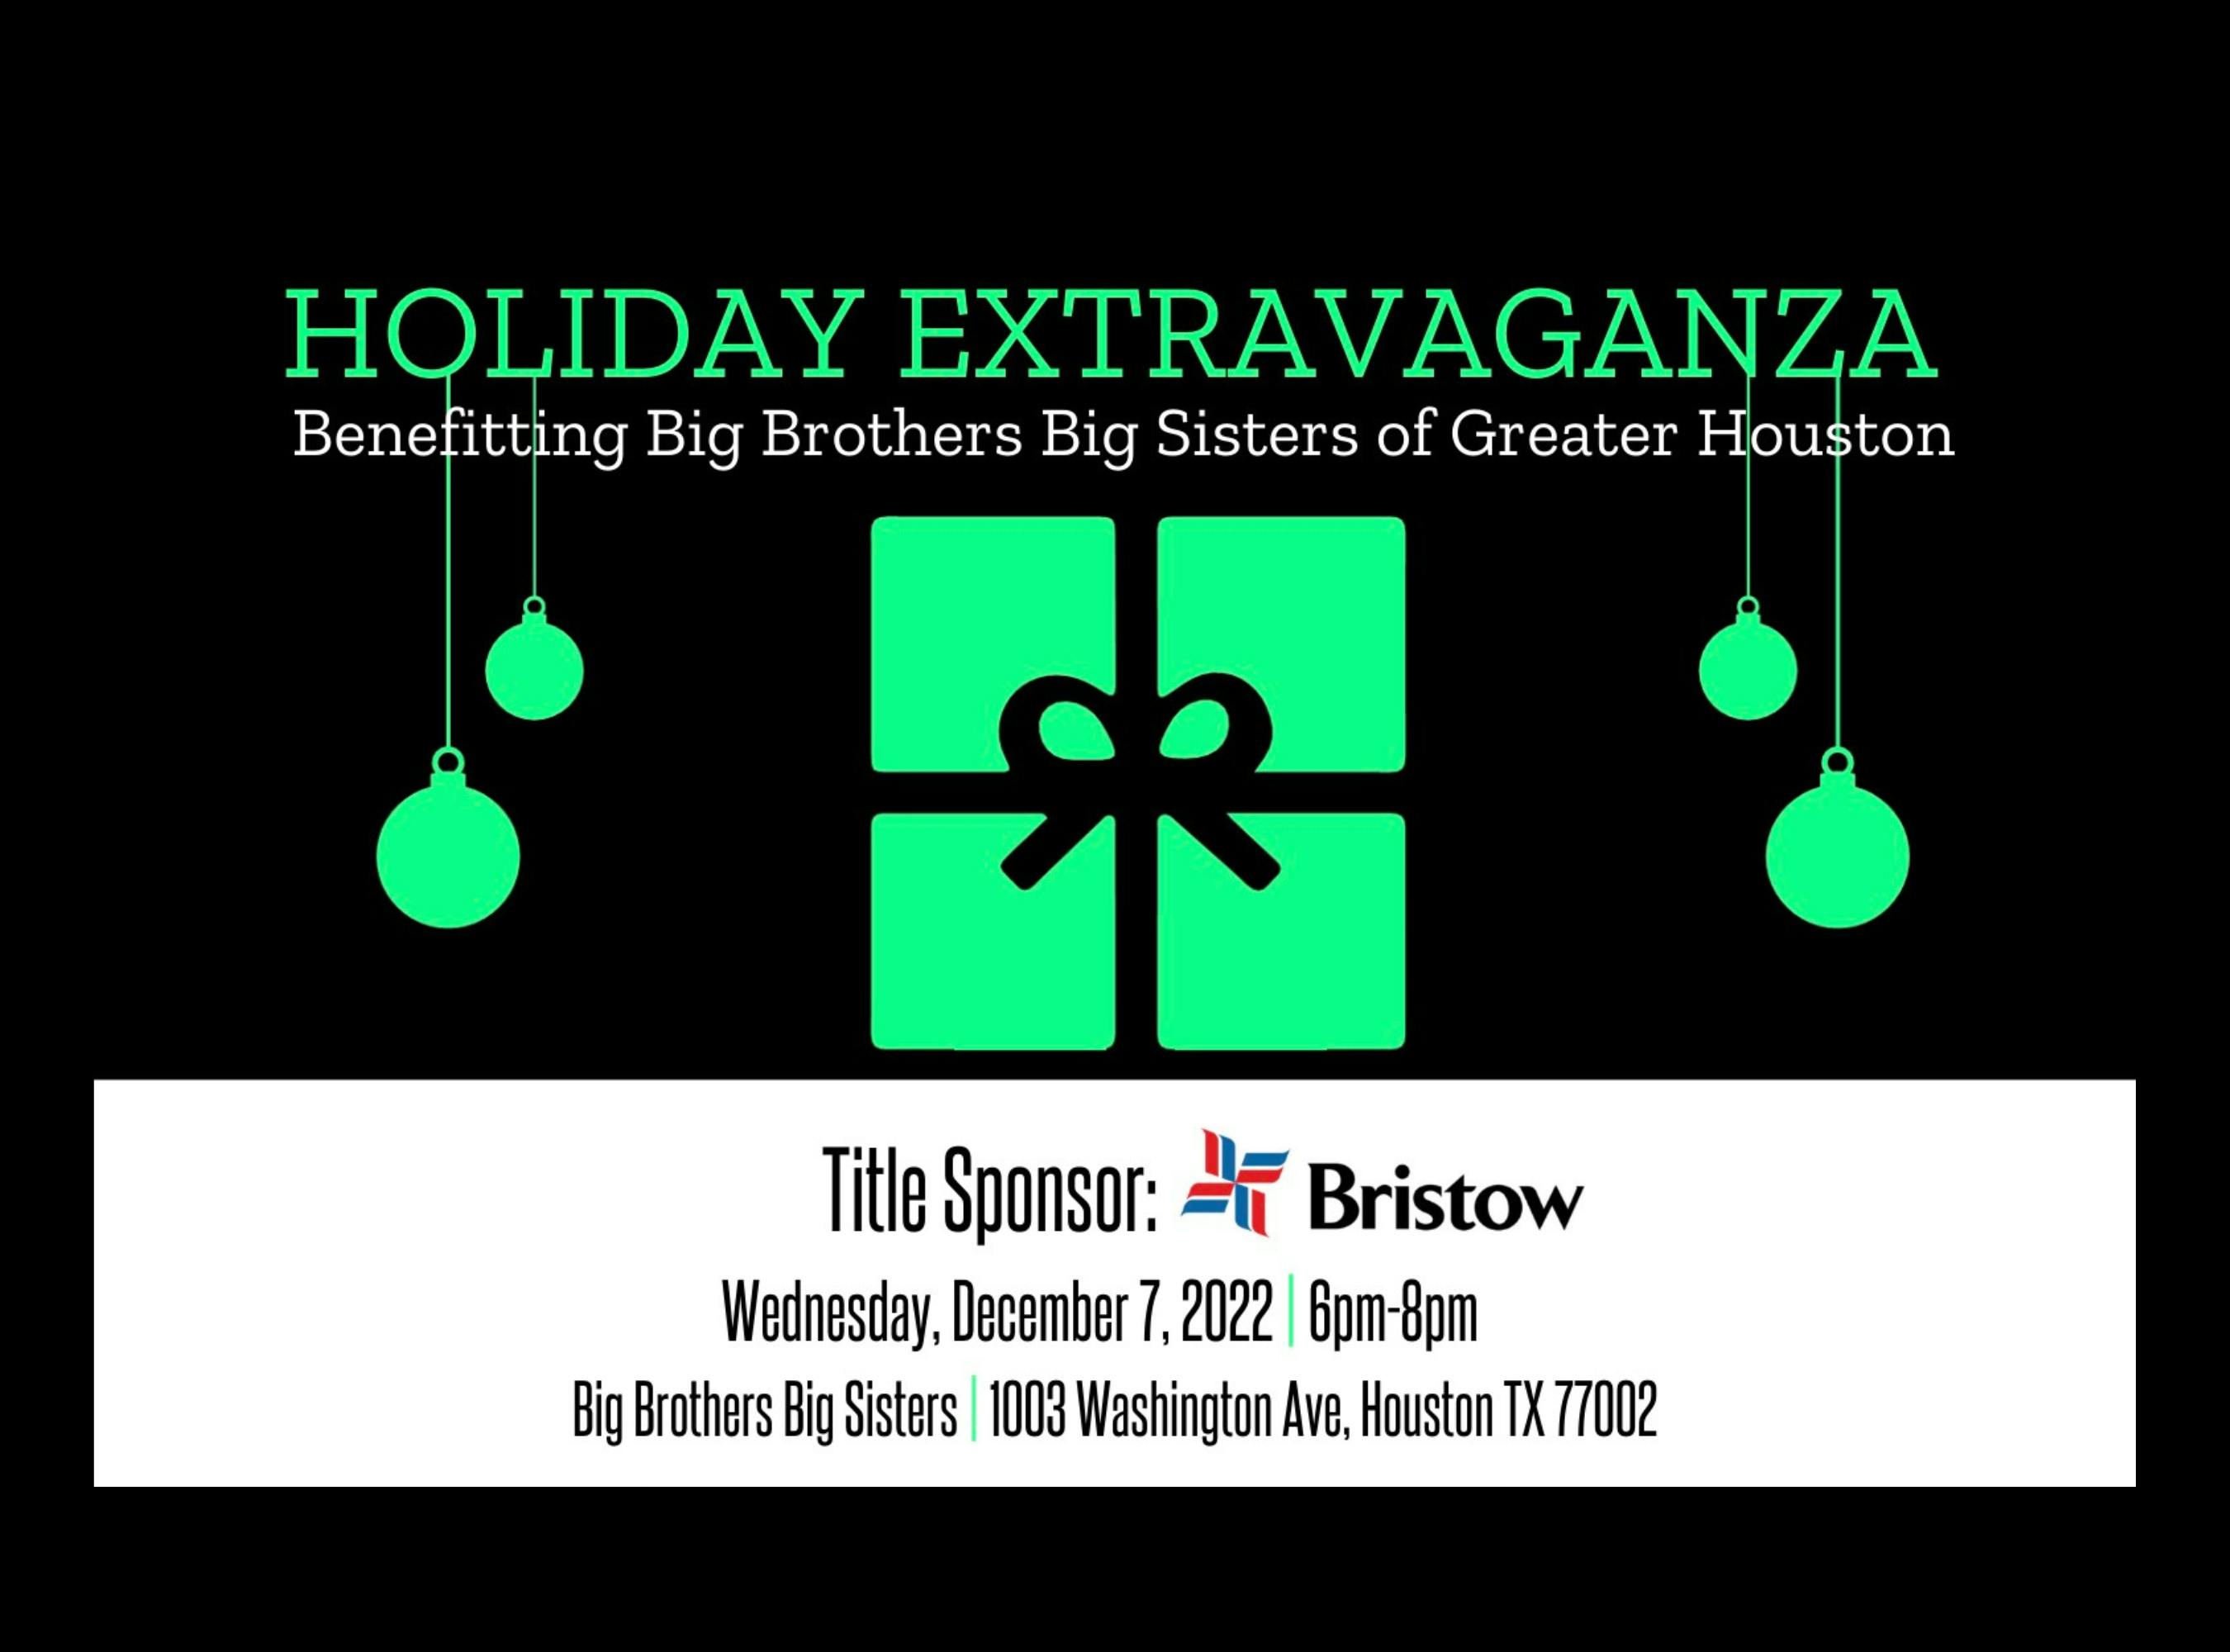 BBBS Holiday Extravaganza cover image